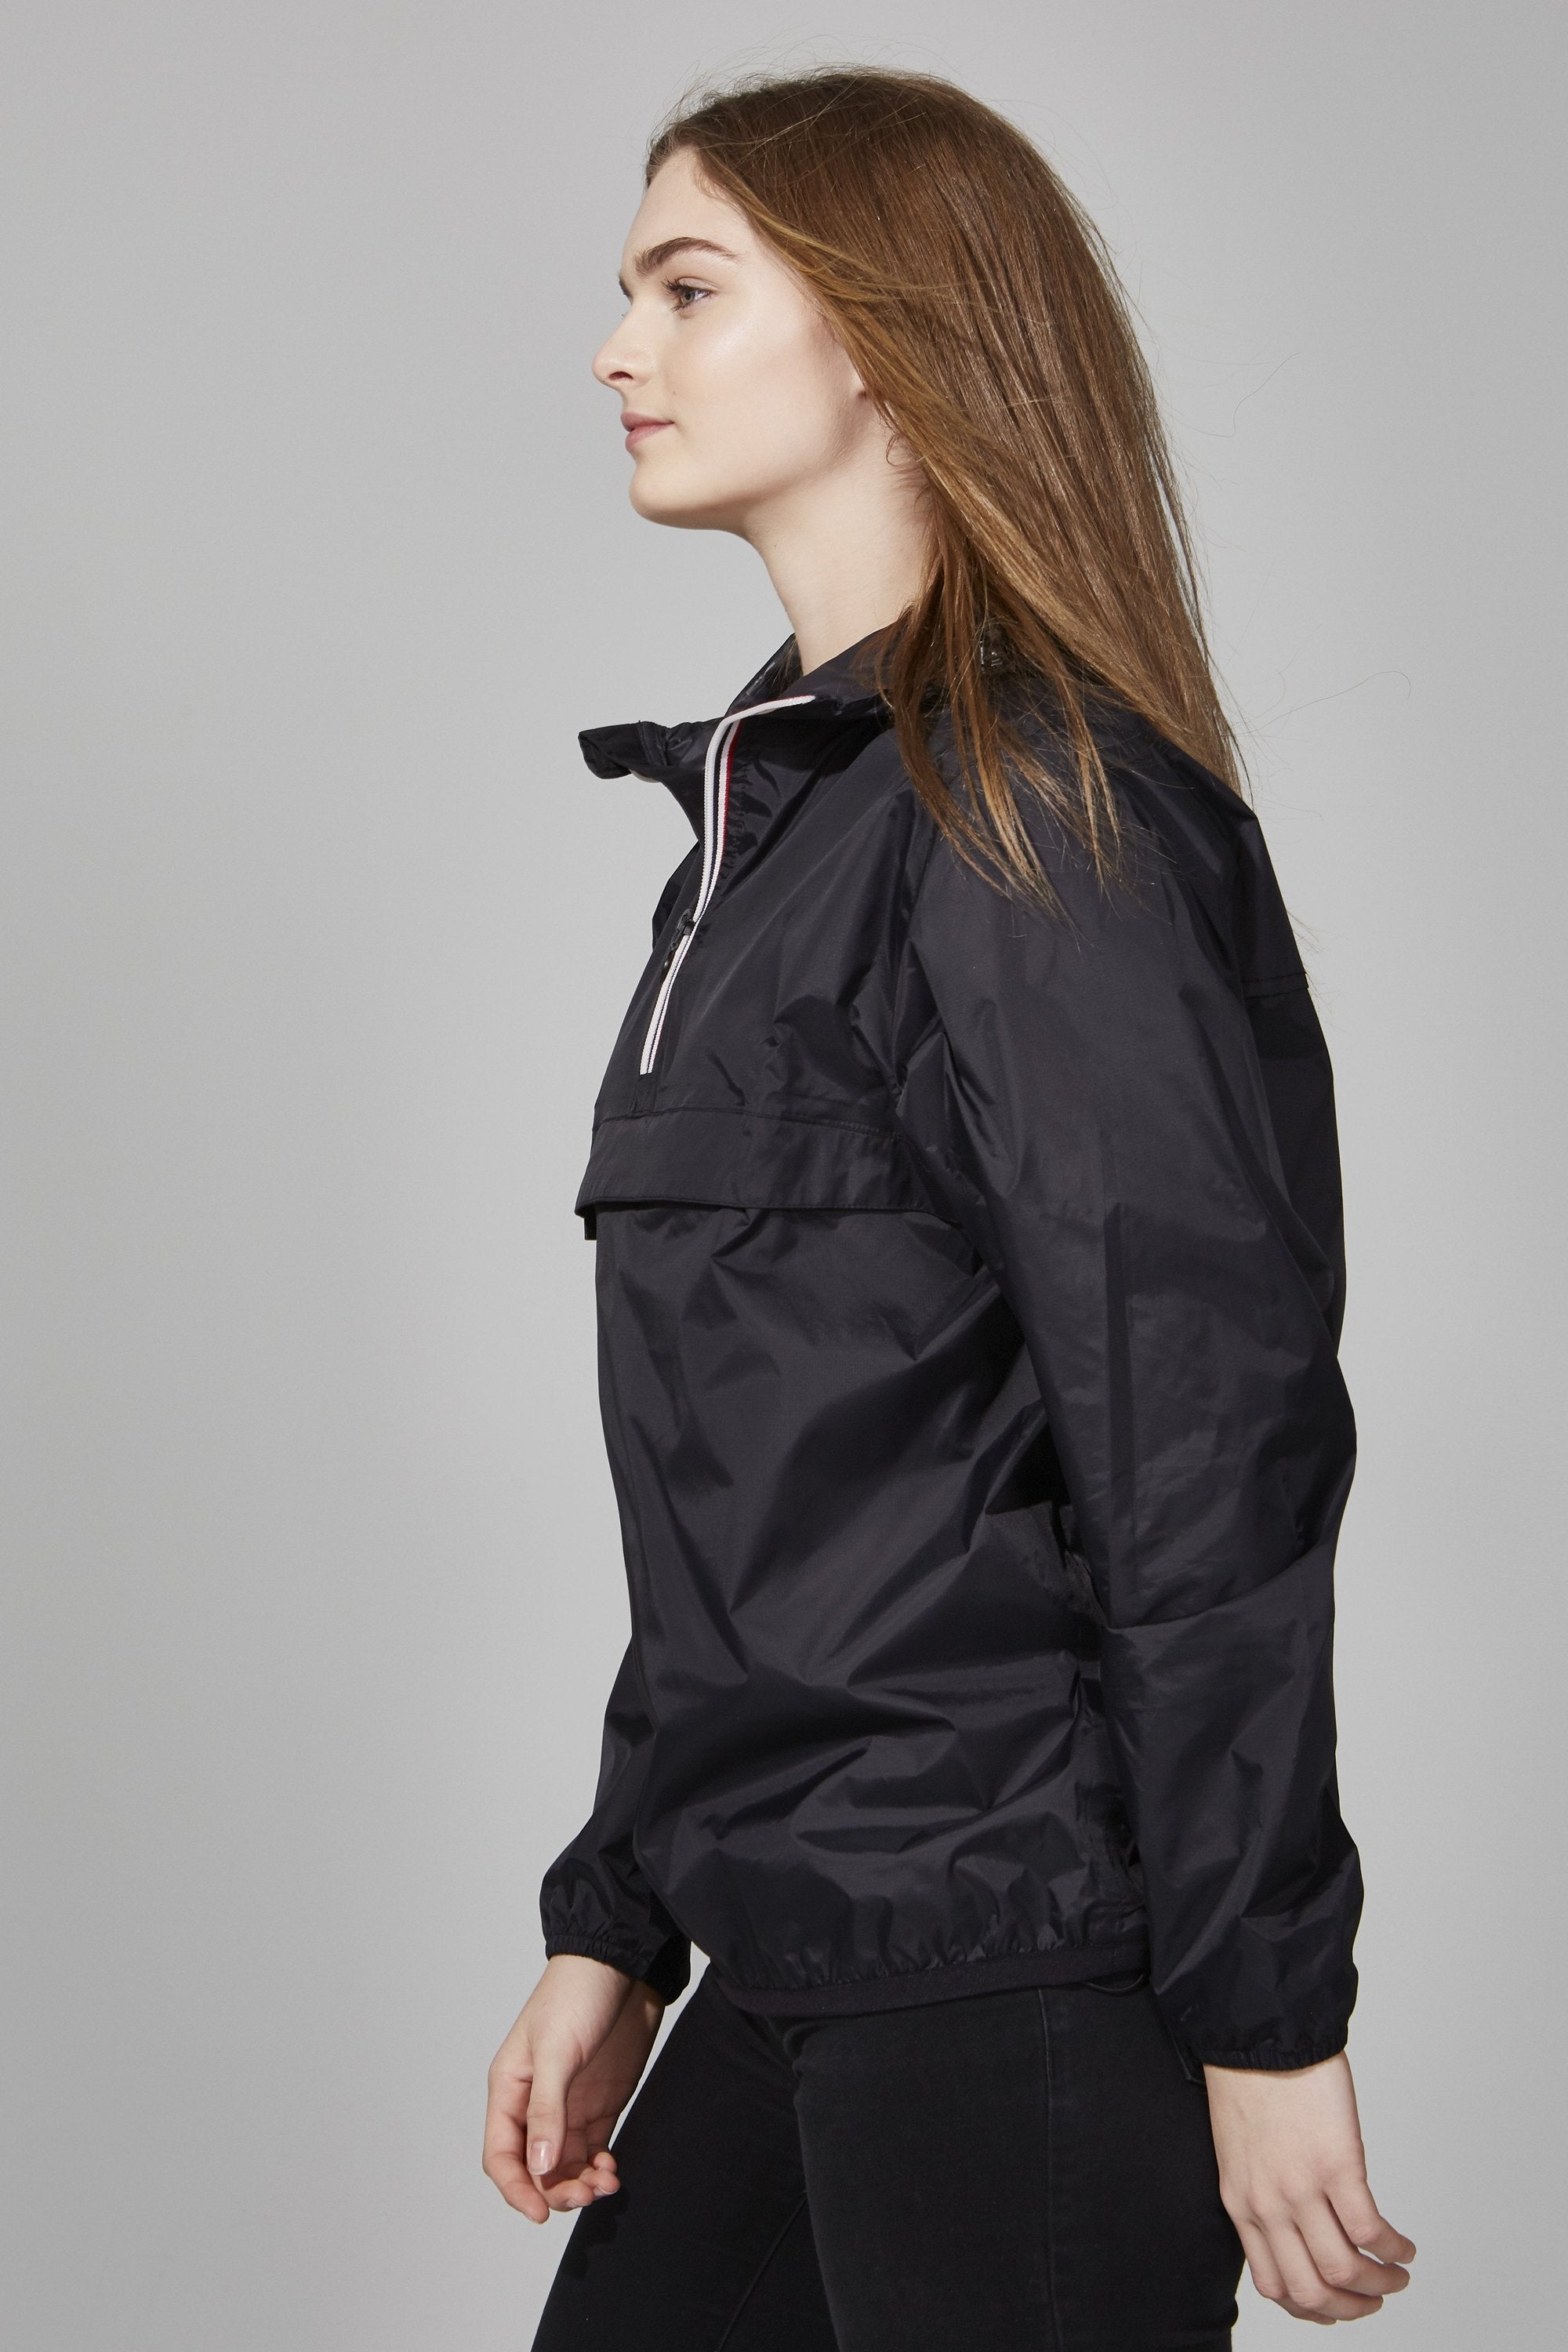 Picture of a Women's Quarter Zip Black Waterproof Rain Jacket side view